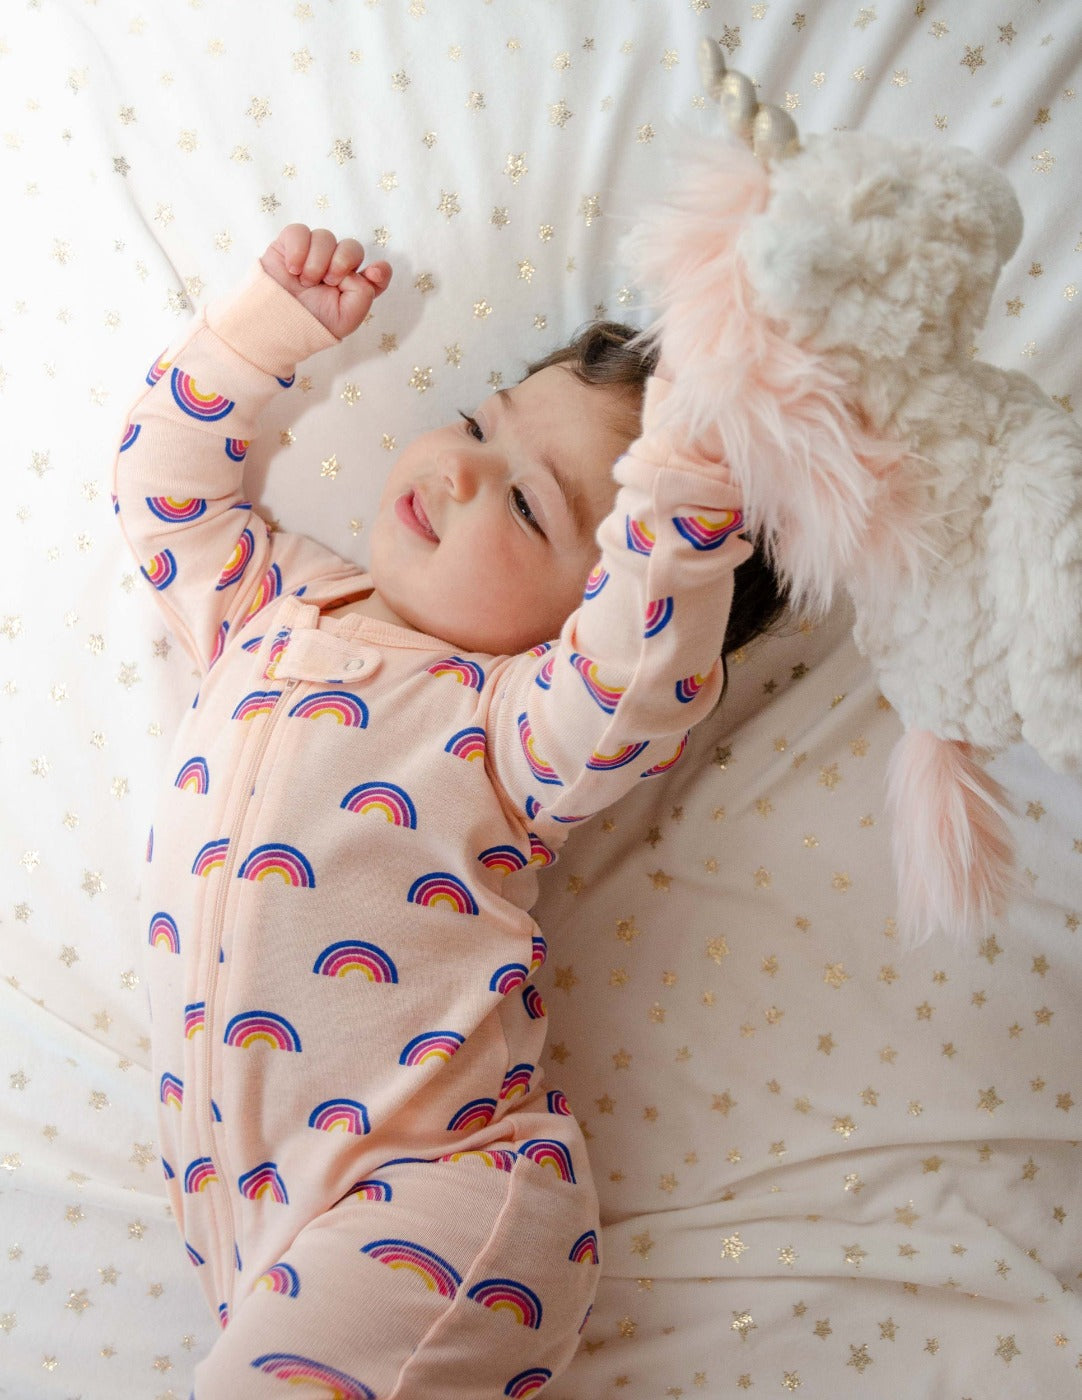 Baby Footed Pajamas